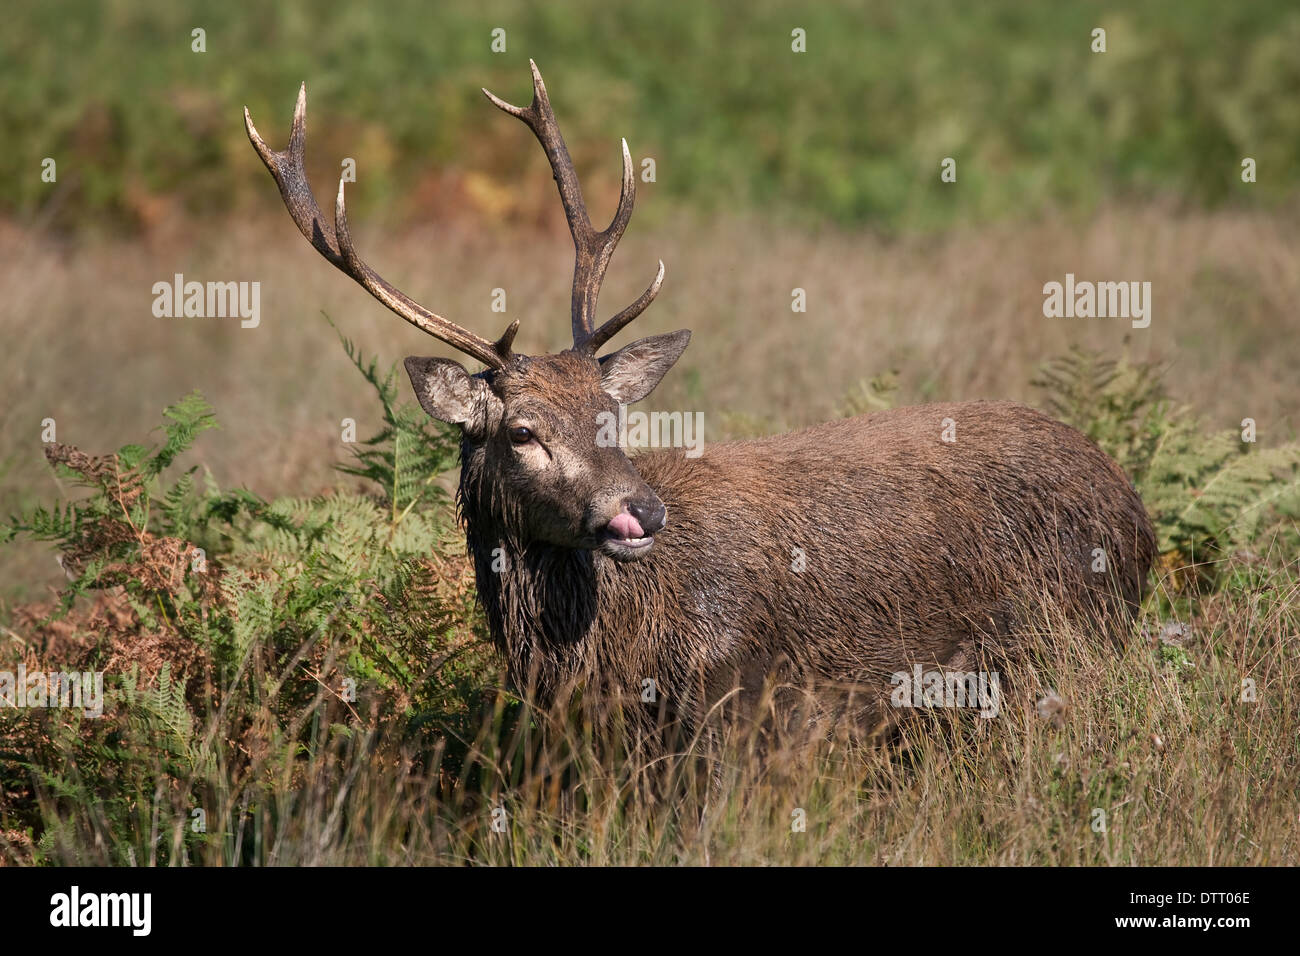 Young red deer pricket emerging from bracken. Stock Photo